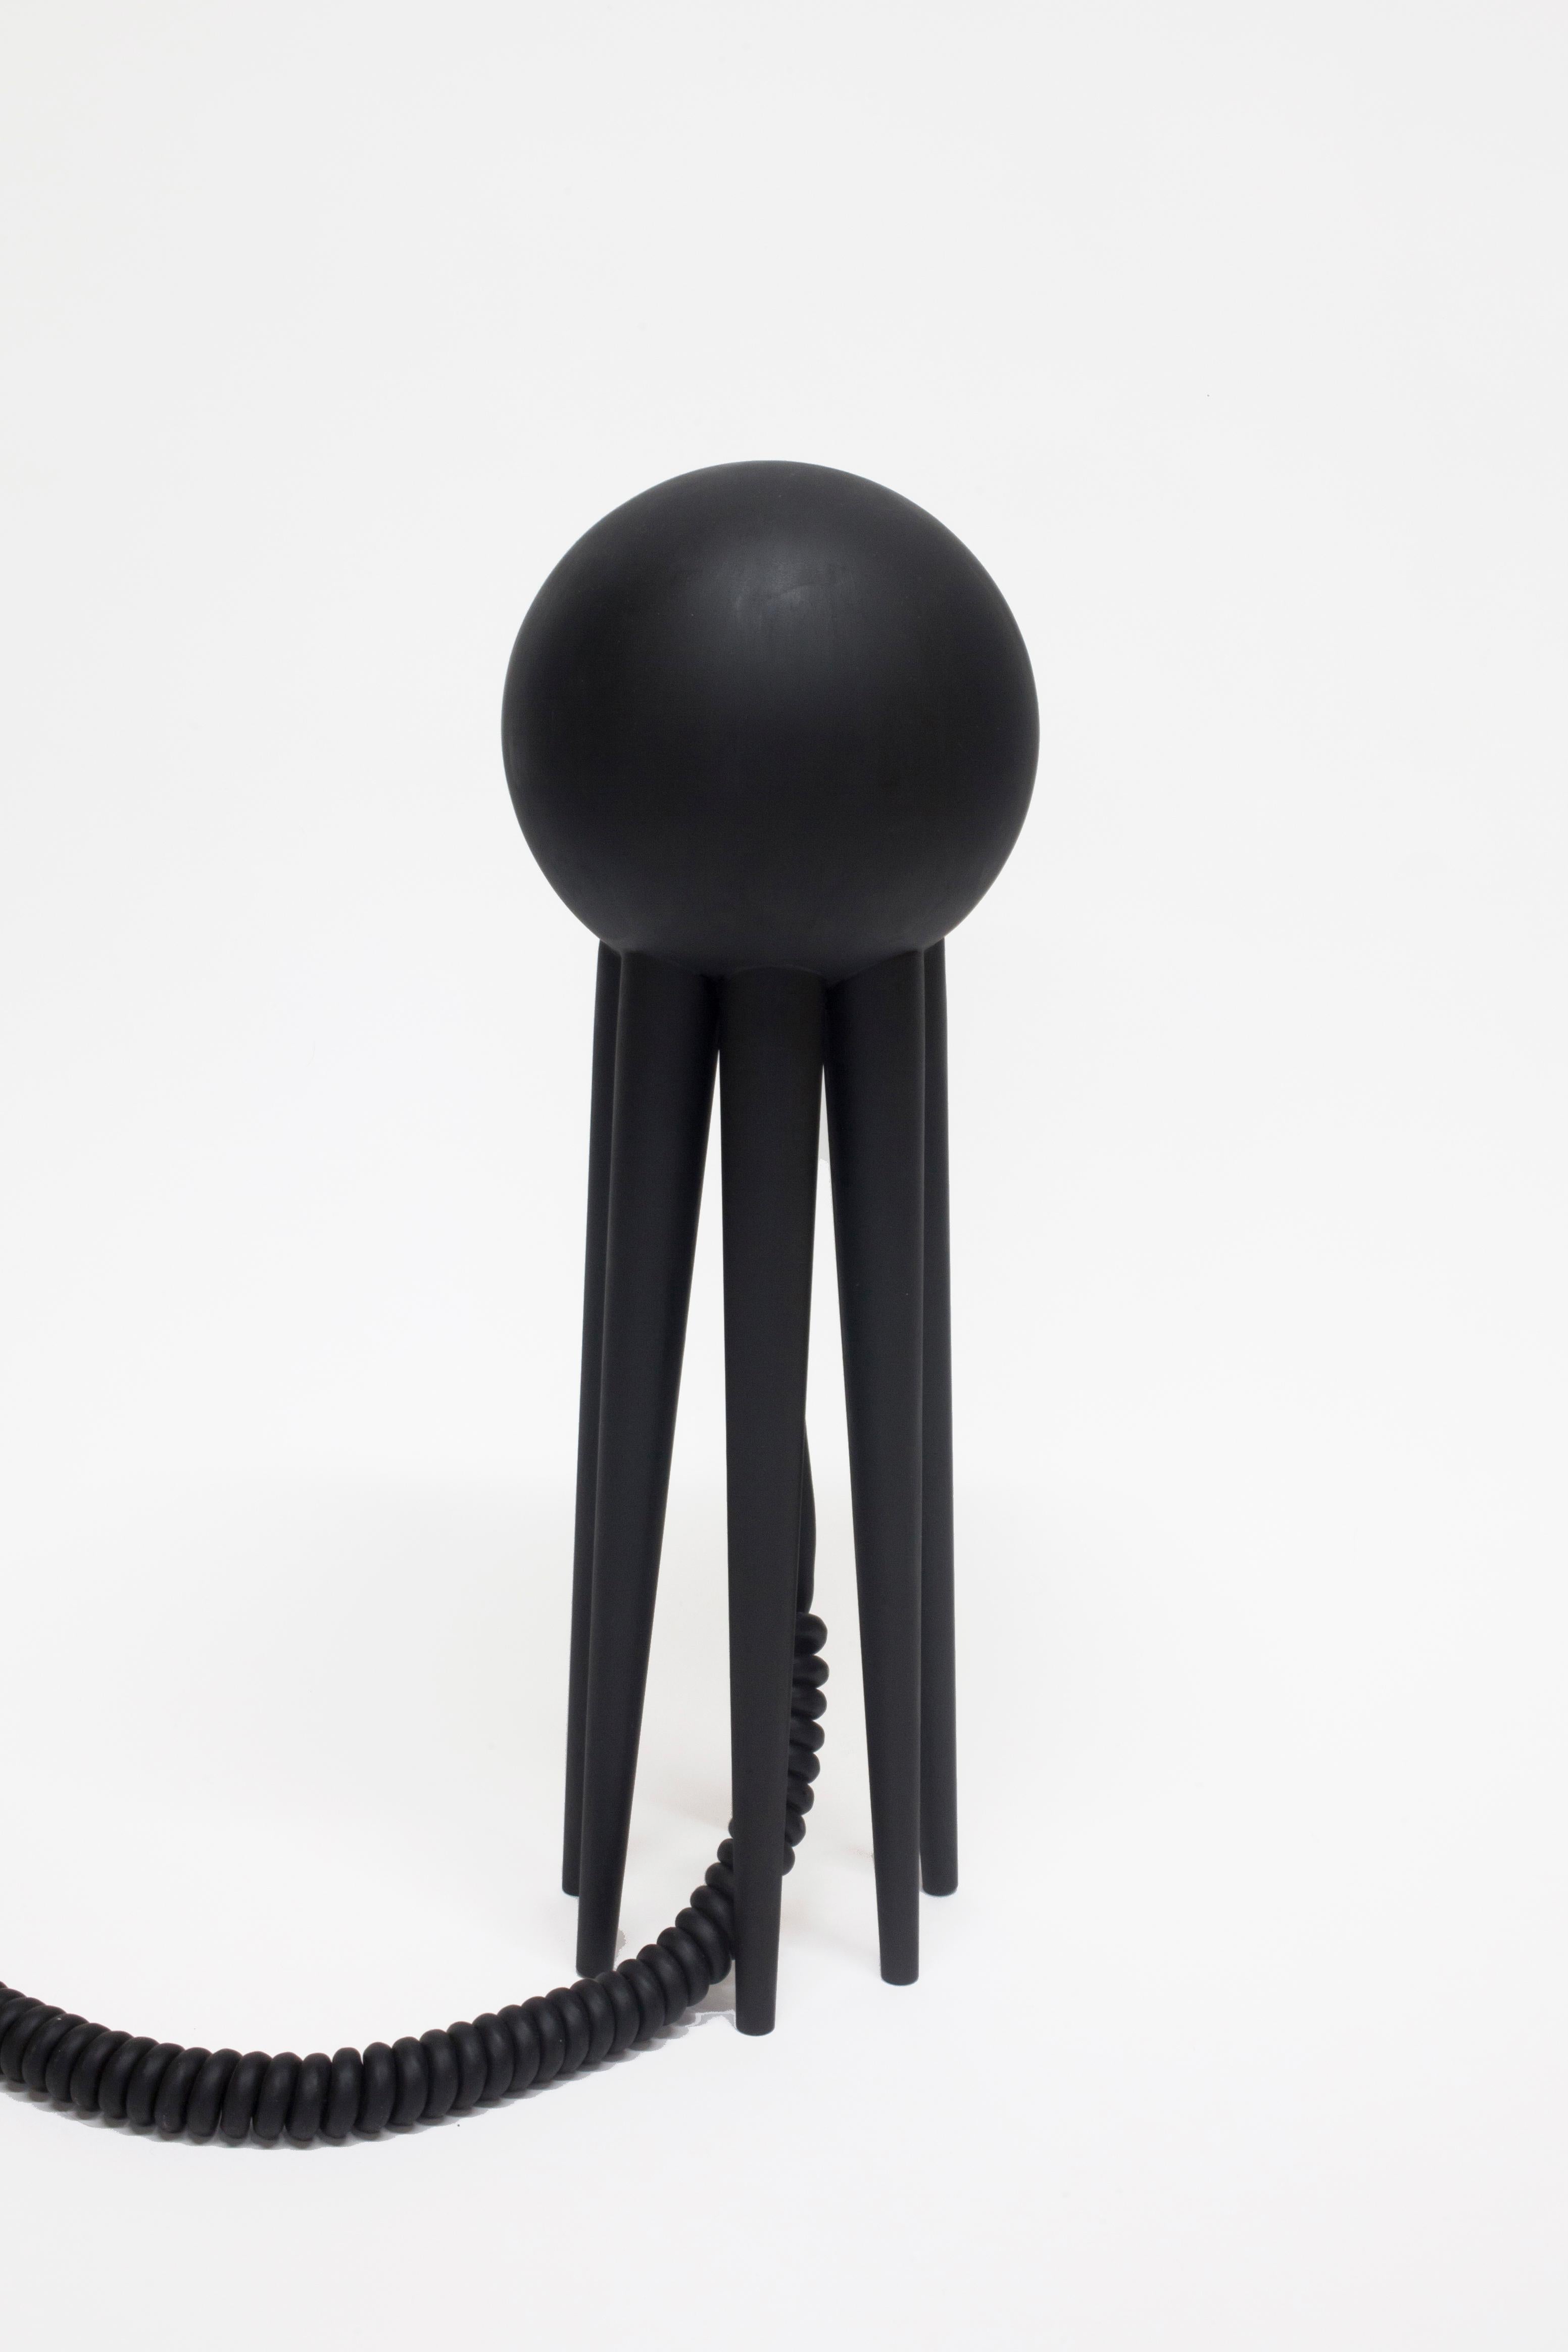 Crepuscule Lamp by Material Lust, 2015 (Moderne) im Angebot